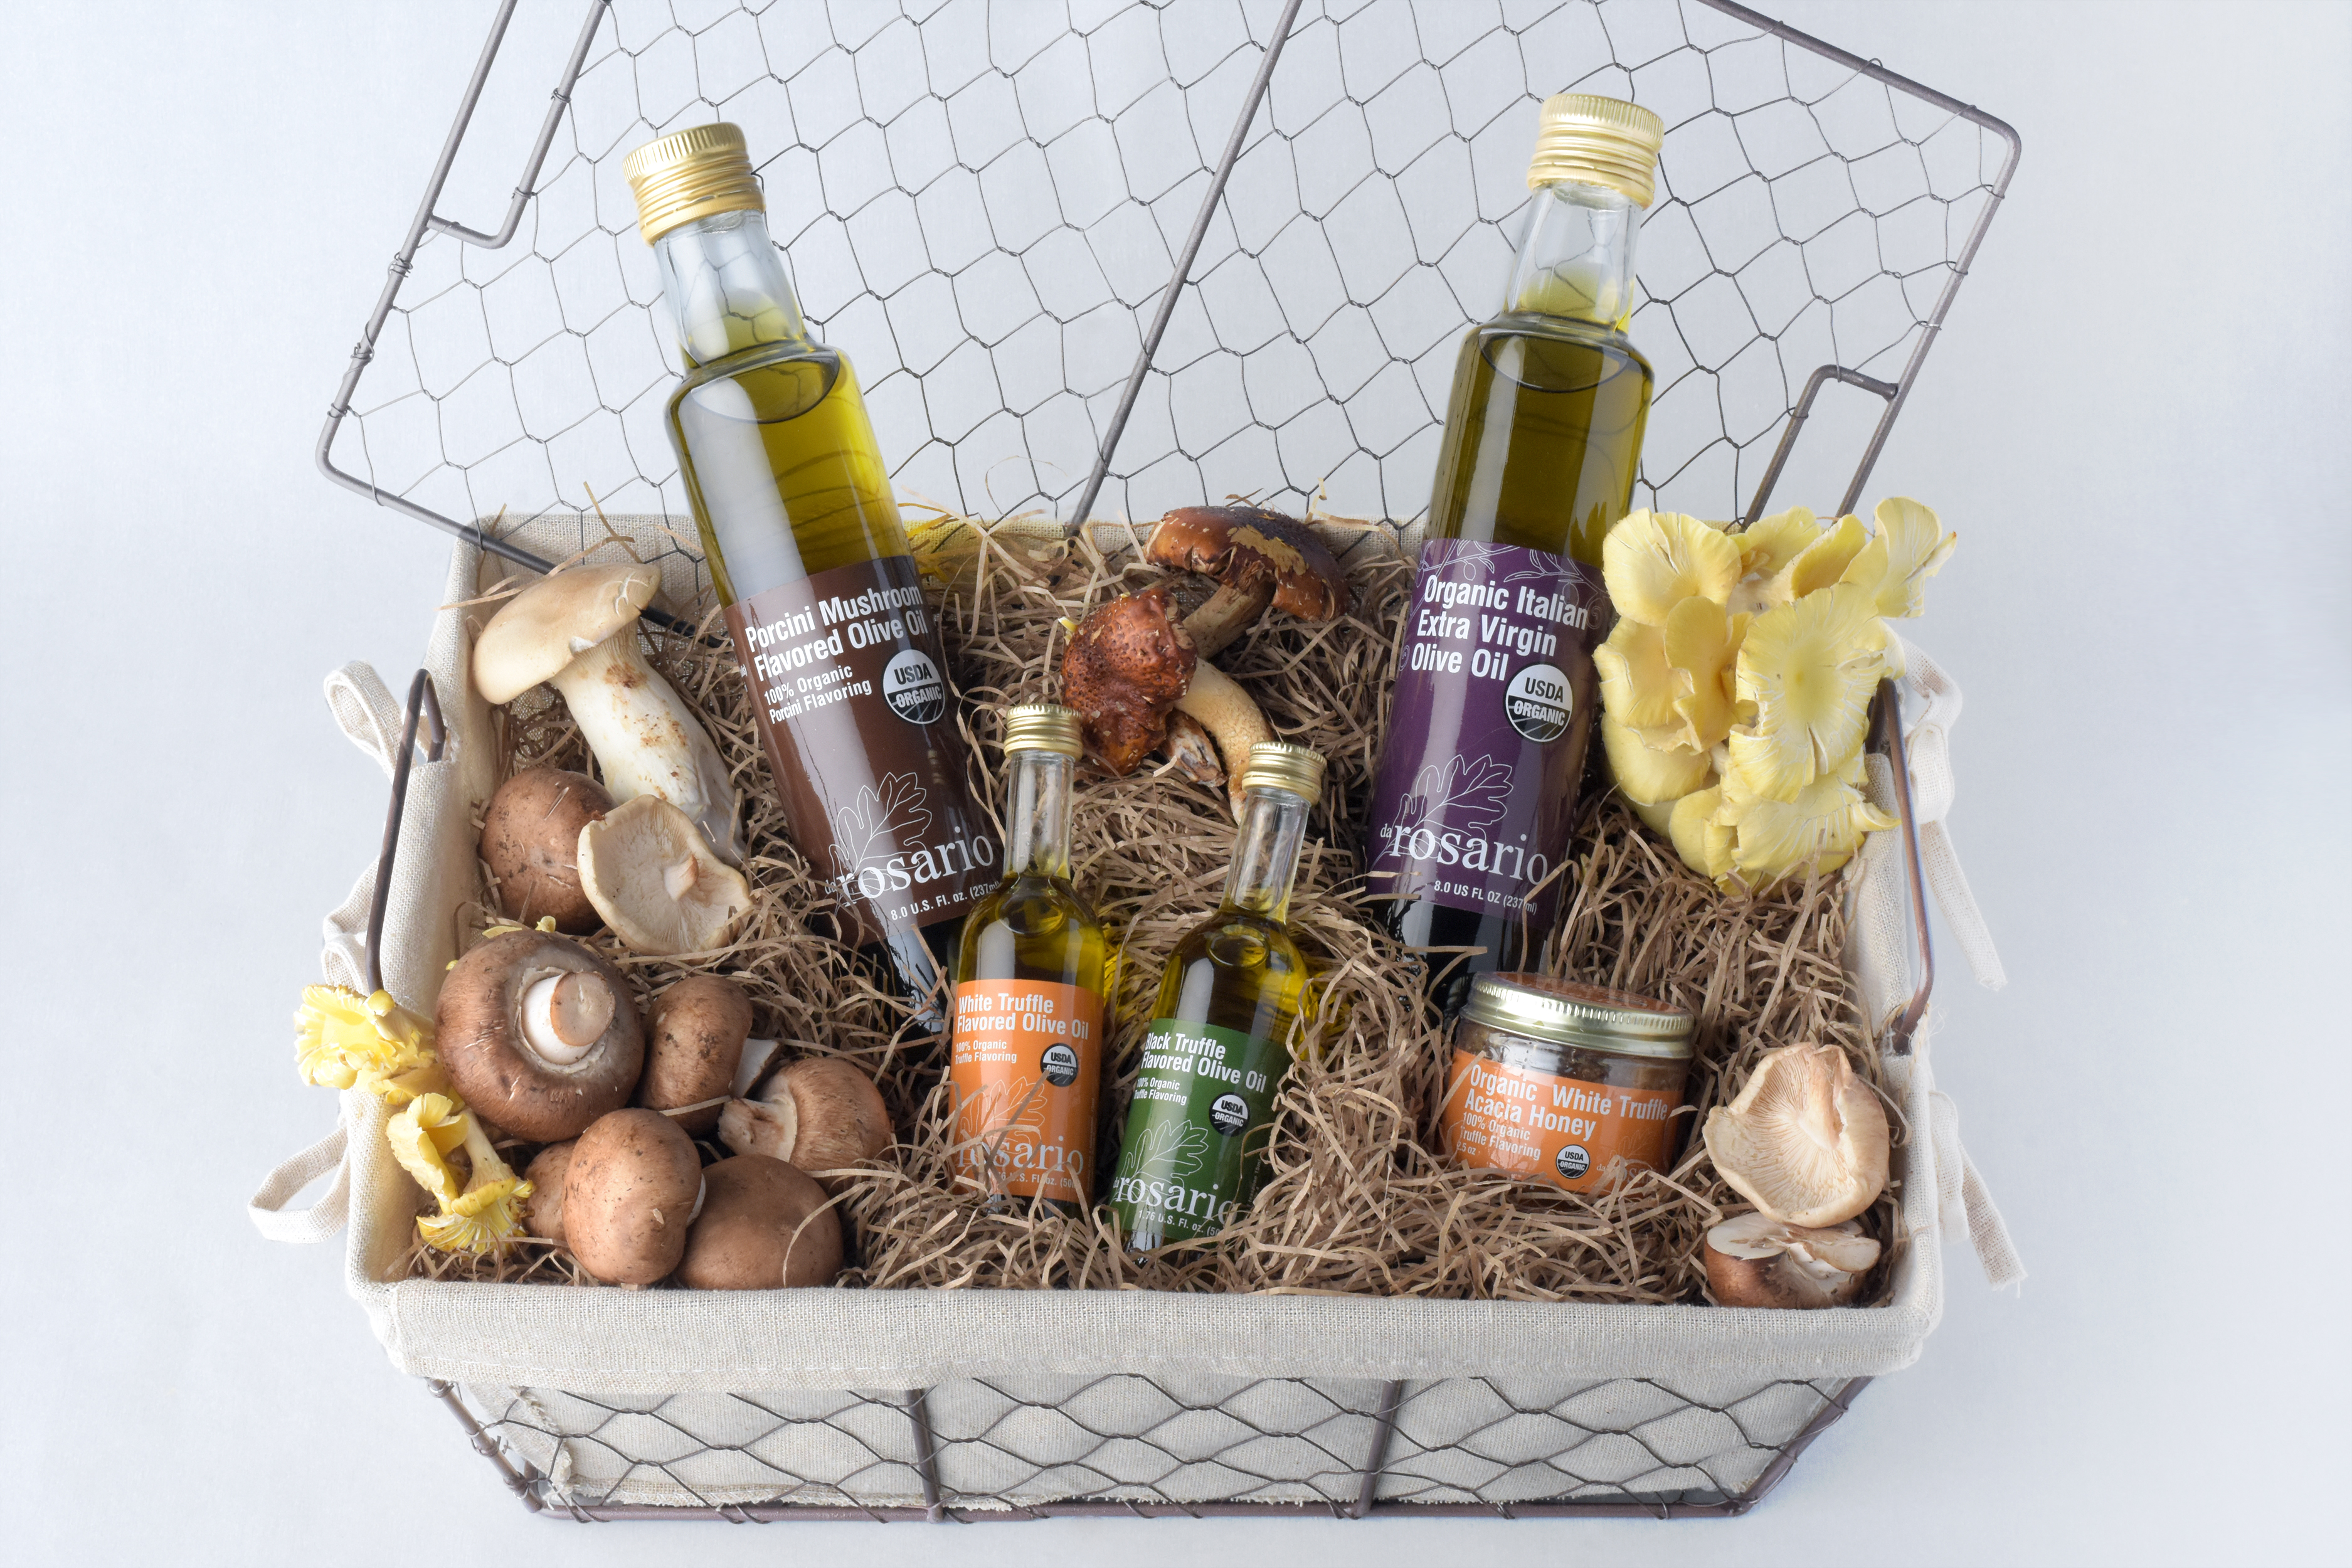 derosario truffle oils